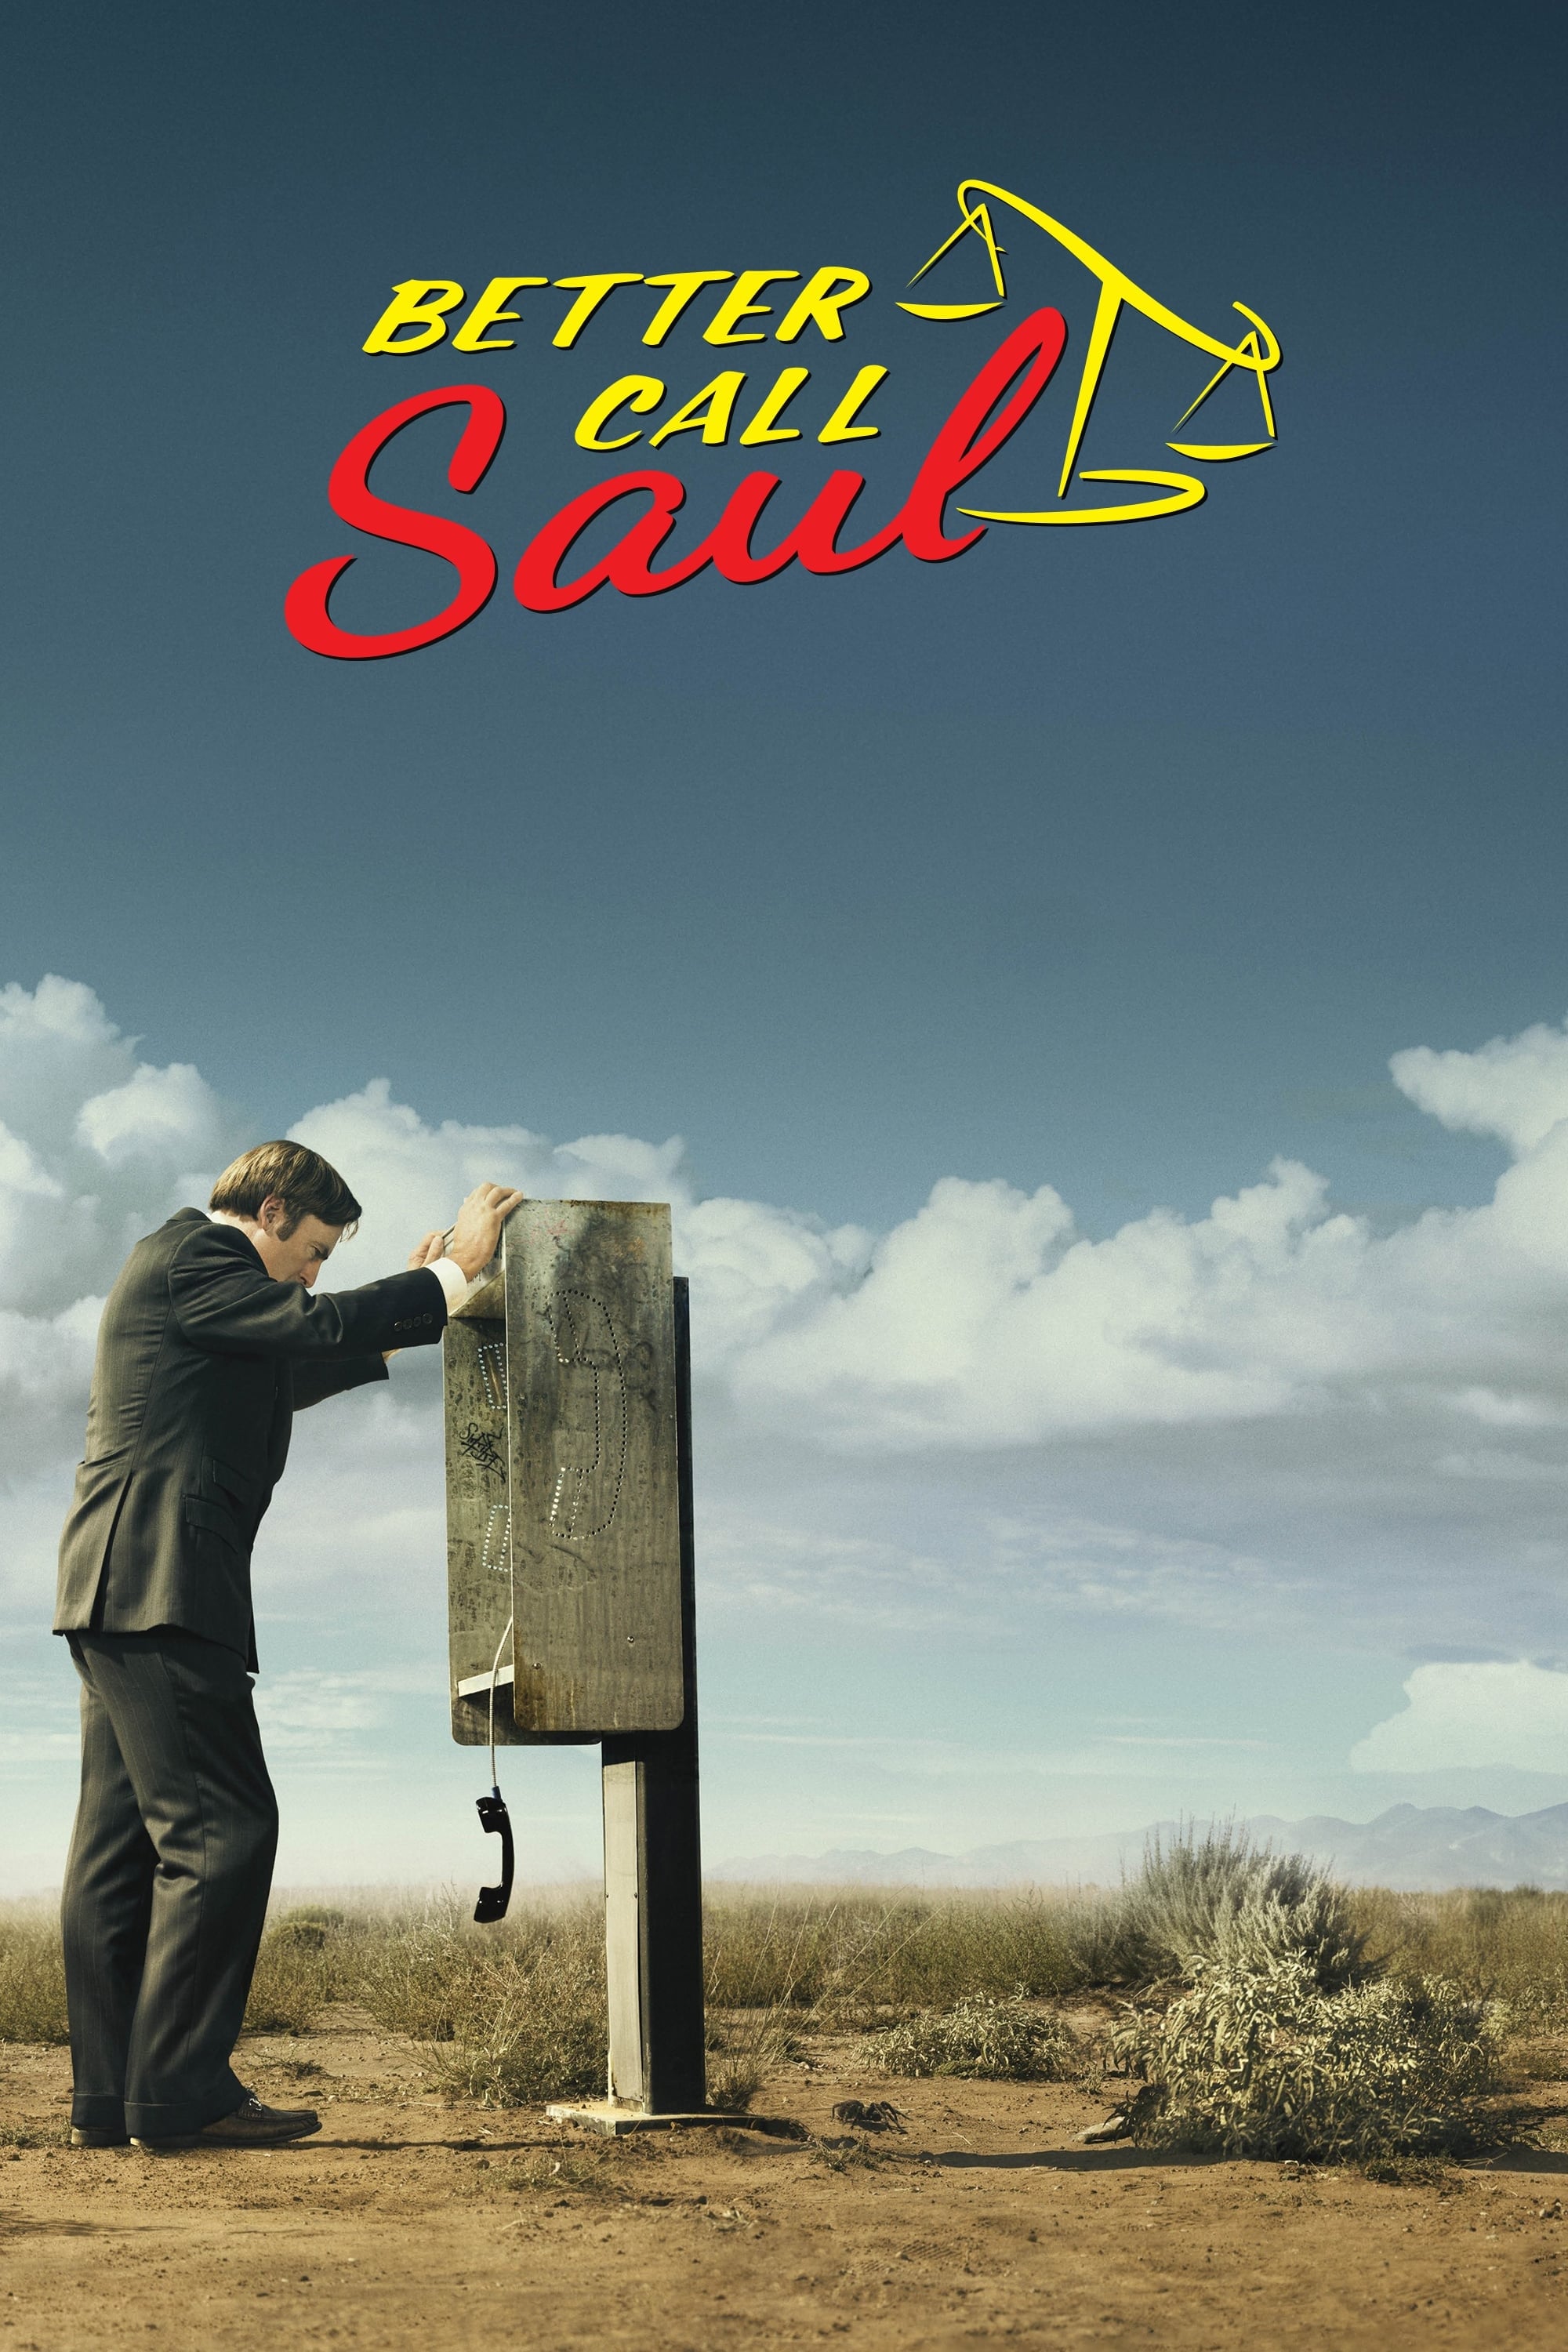 Better Call Saul (season 1) (2015)